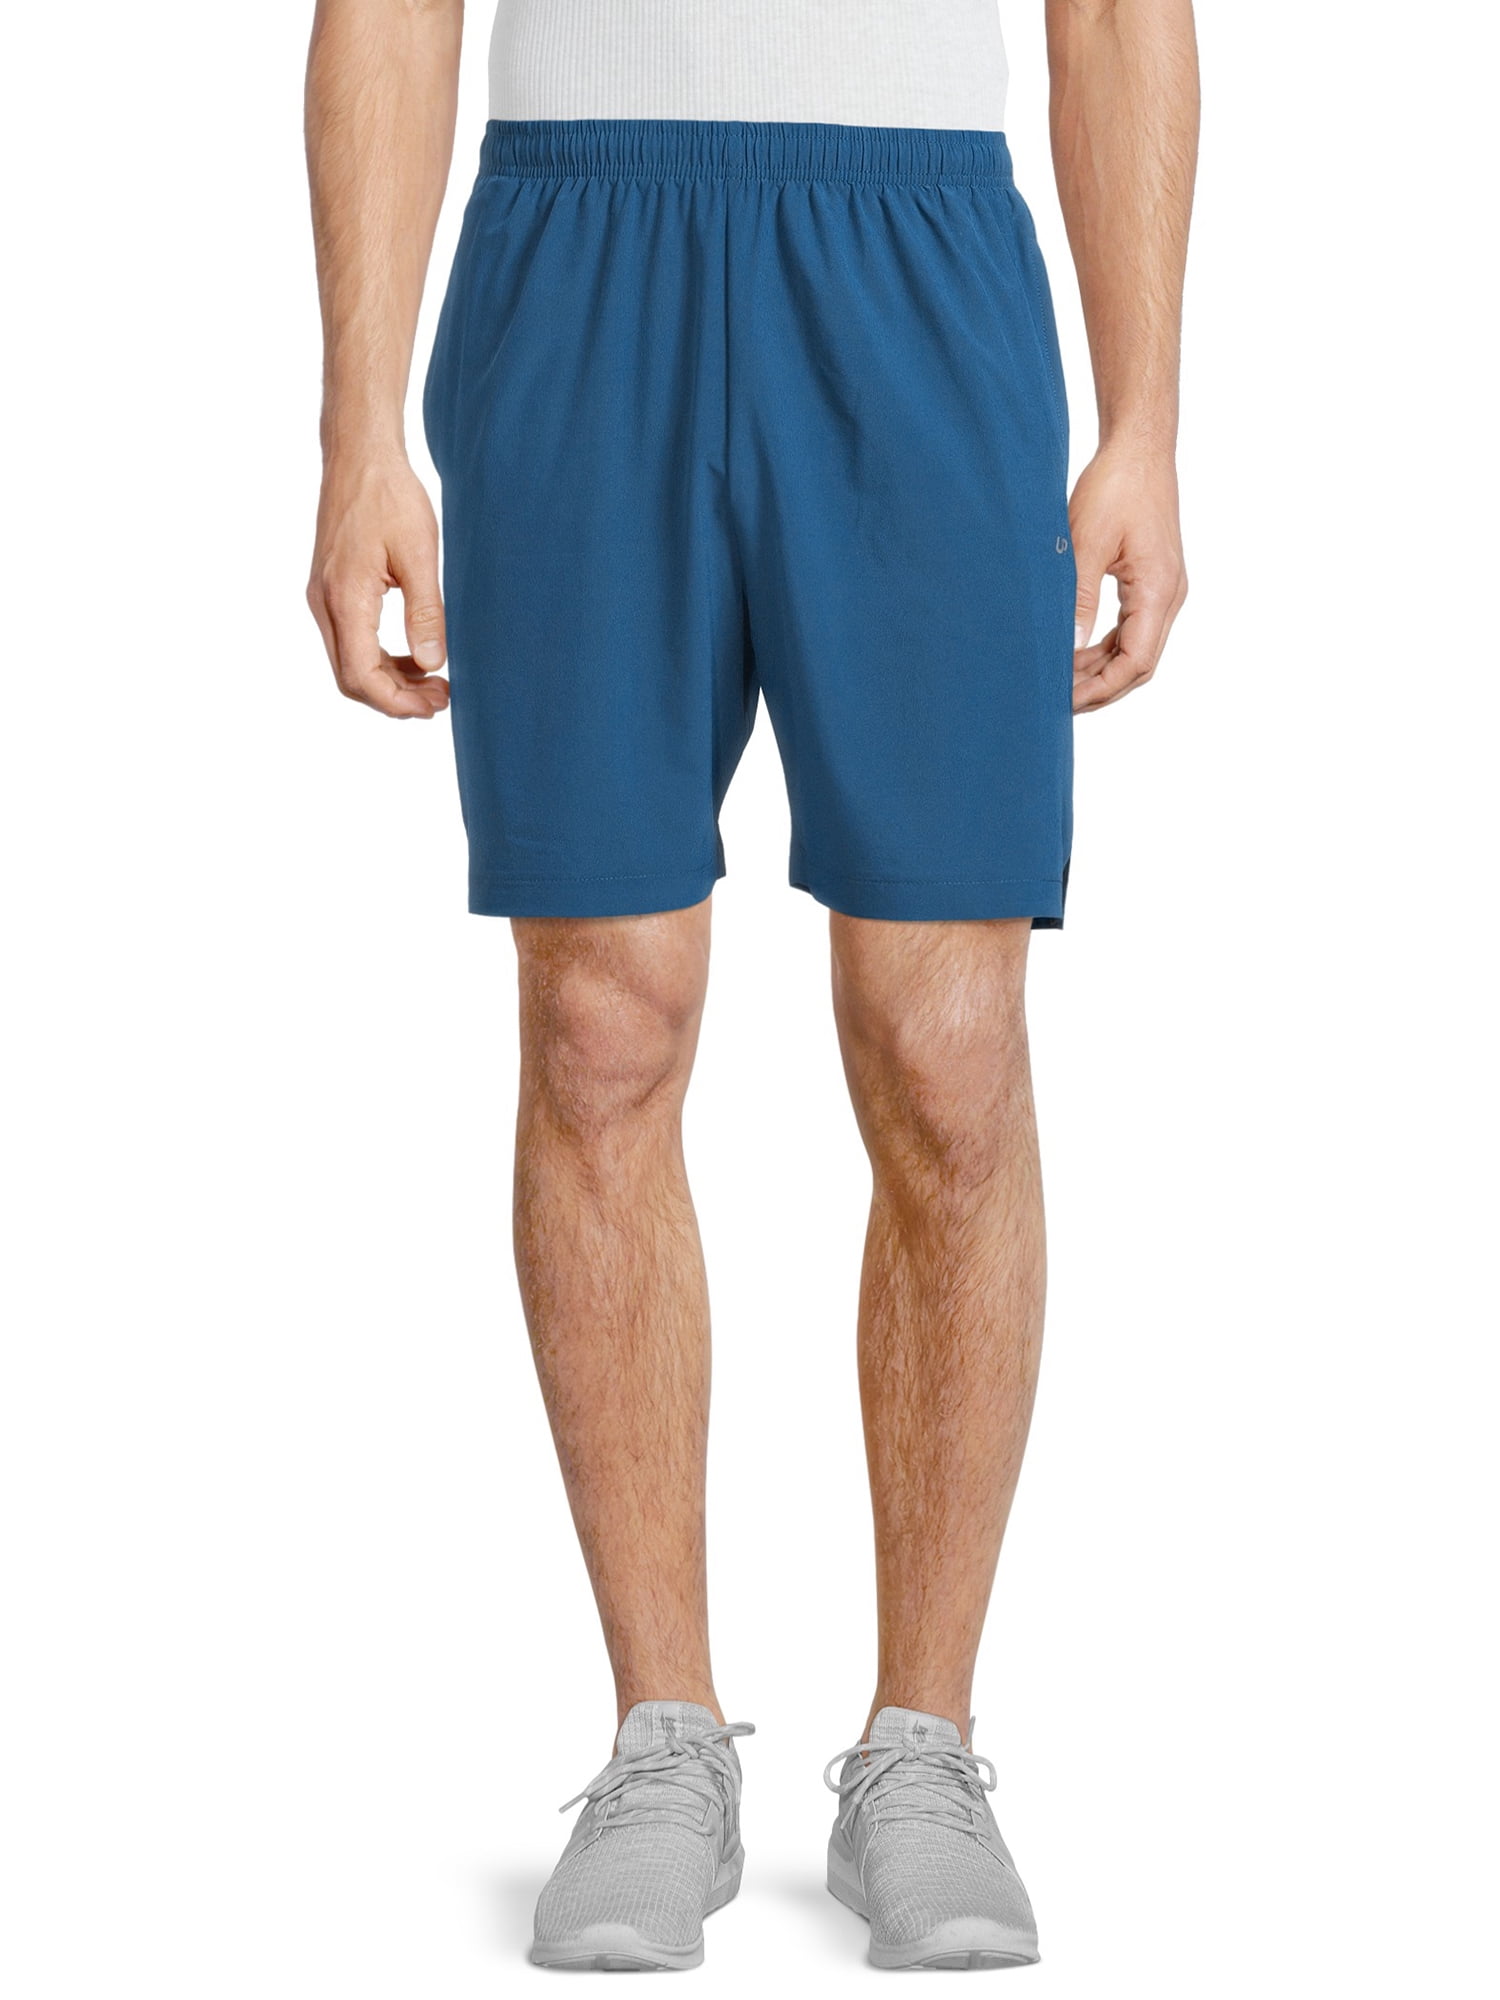 unipro trek shorts